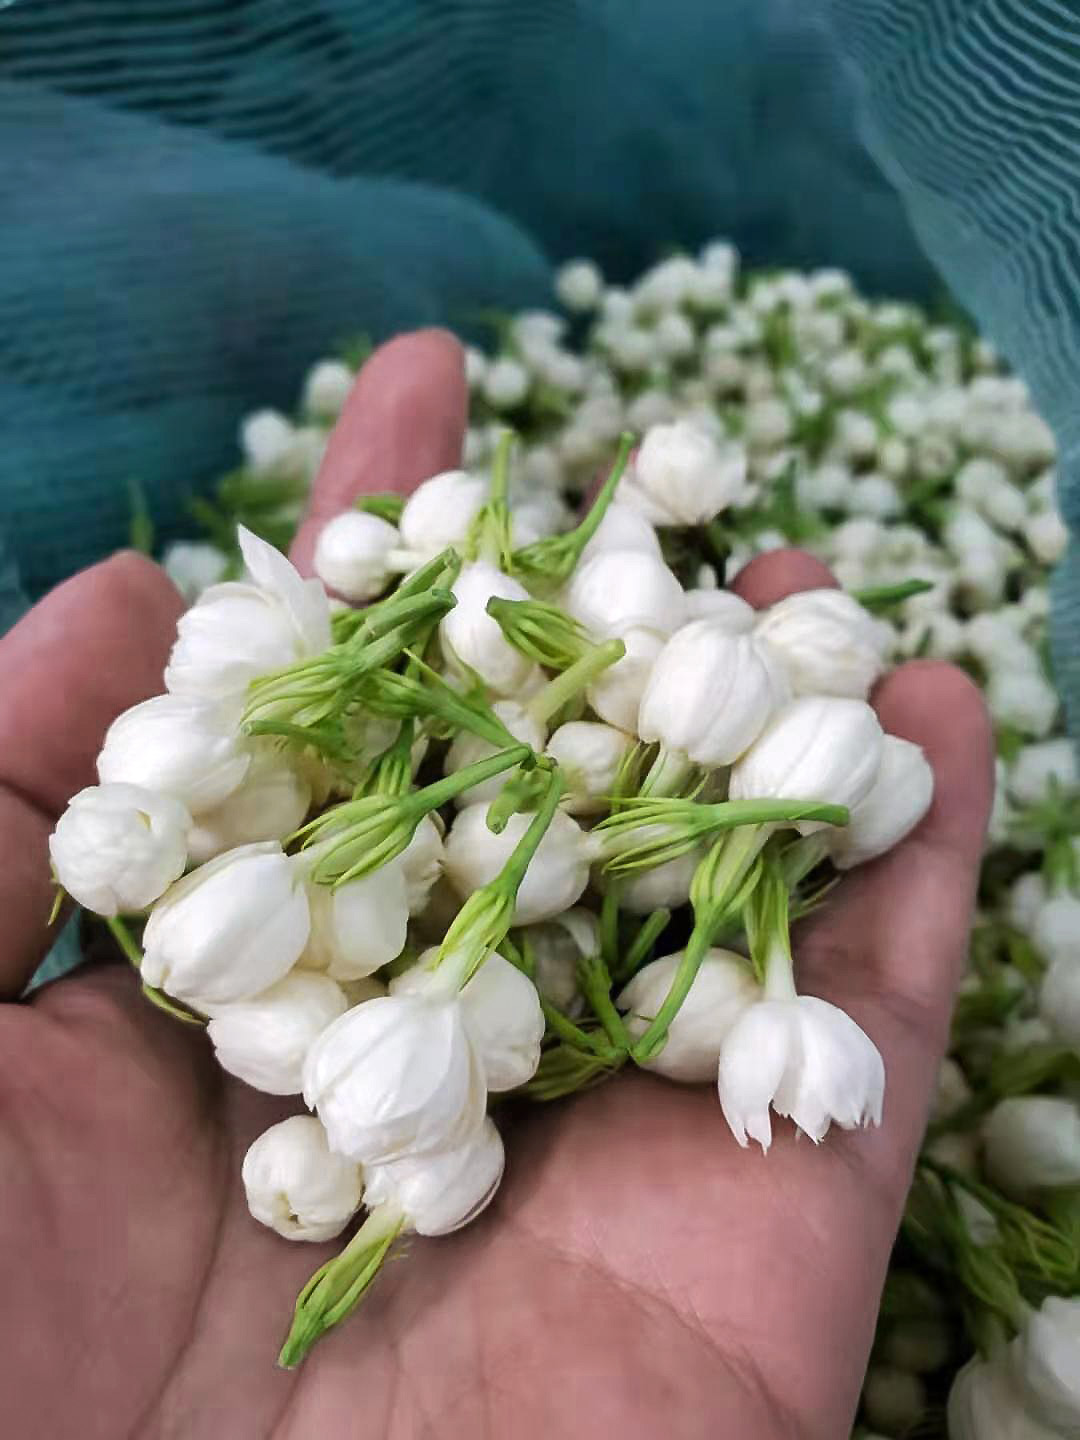 A handful of fresh jasmine flower buds for scenting Snow Drop Jasmine green tea. 2021.